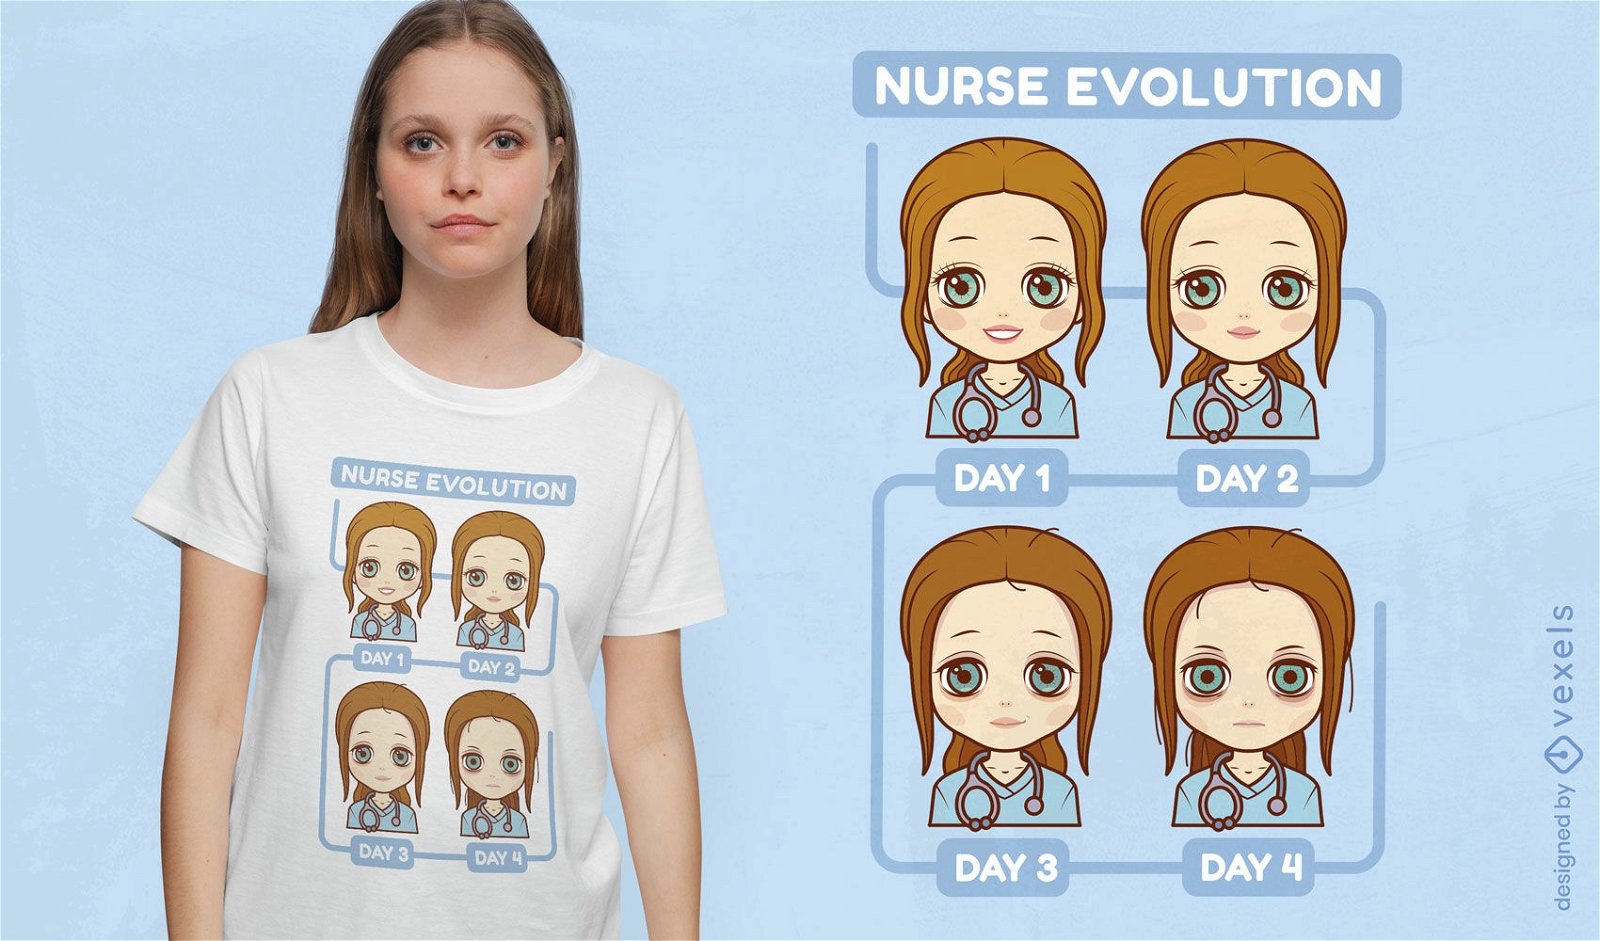 Dise?o de camiseta de evoluci?n de personaje de enfermera.